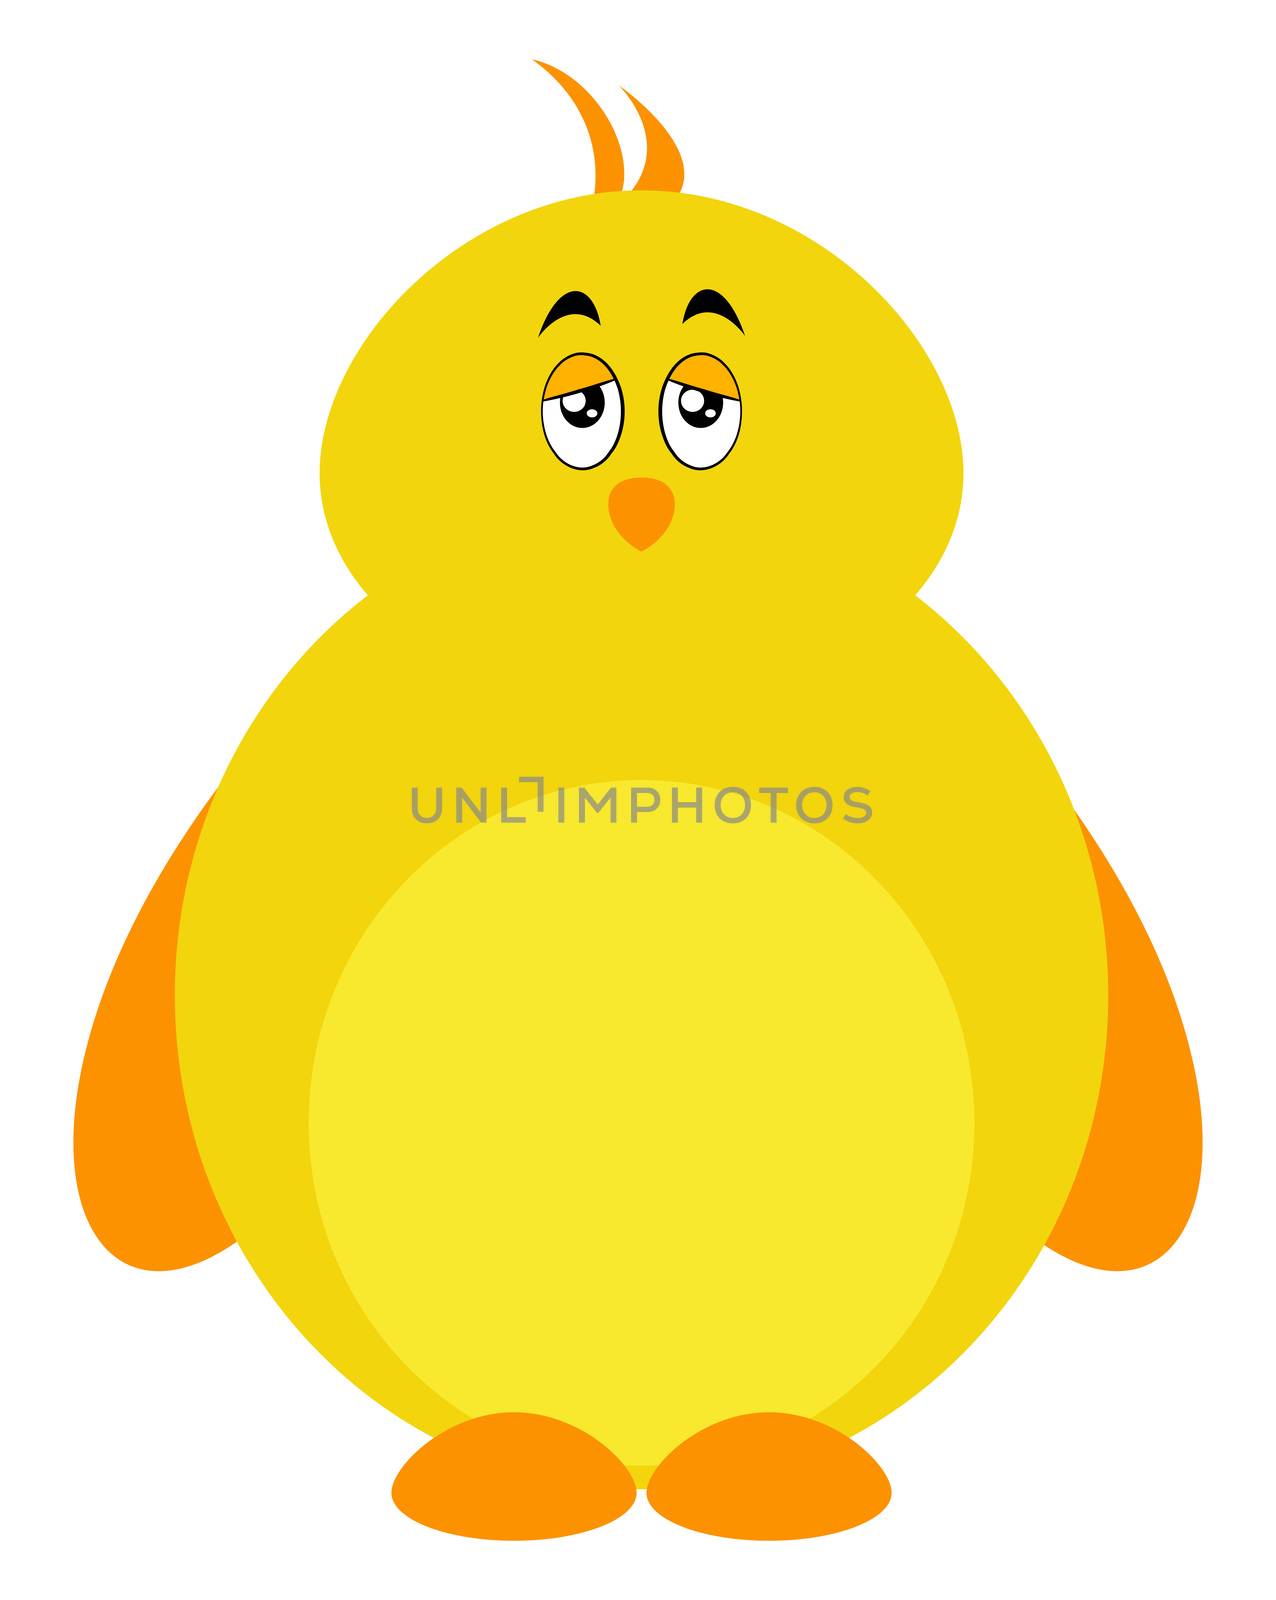 Fat yellow bird, illustration, vector on white background